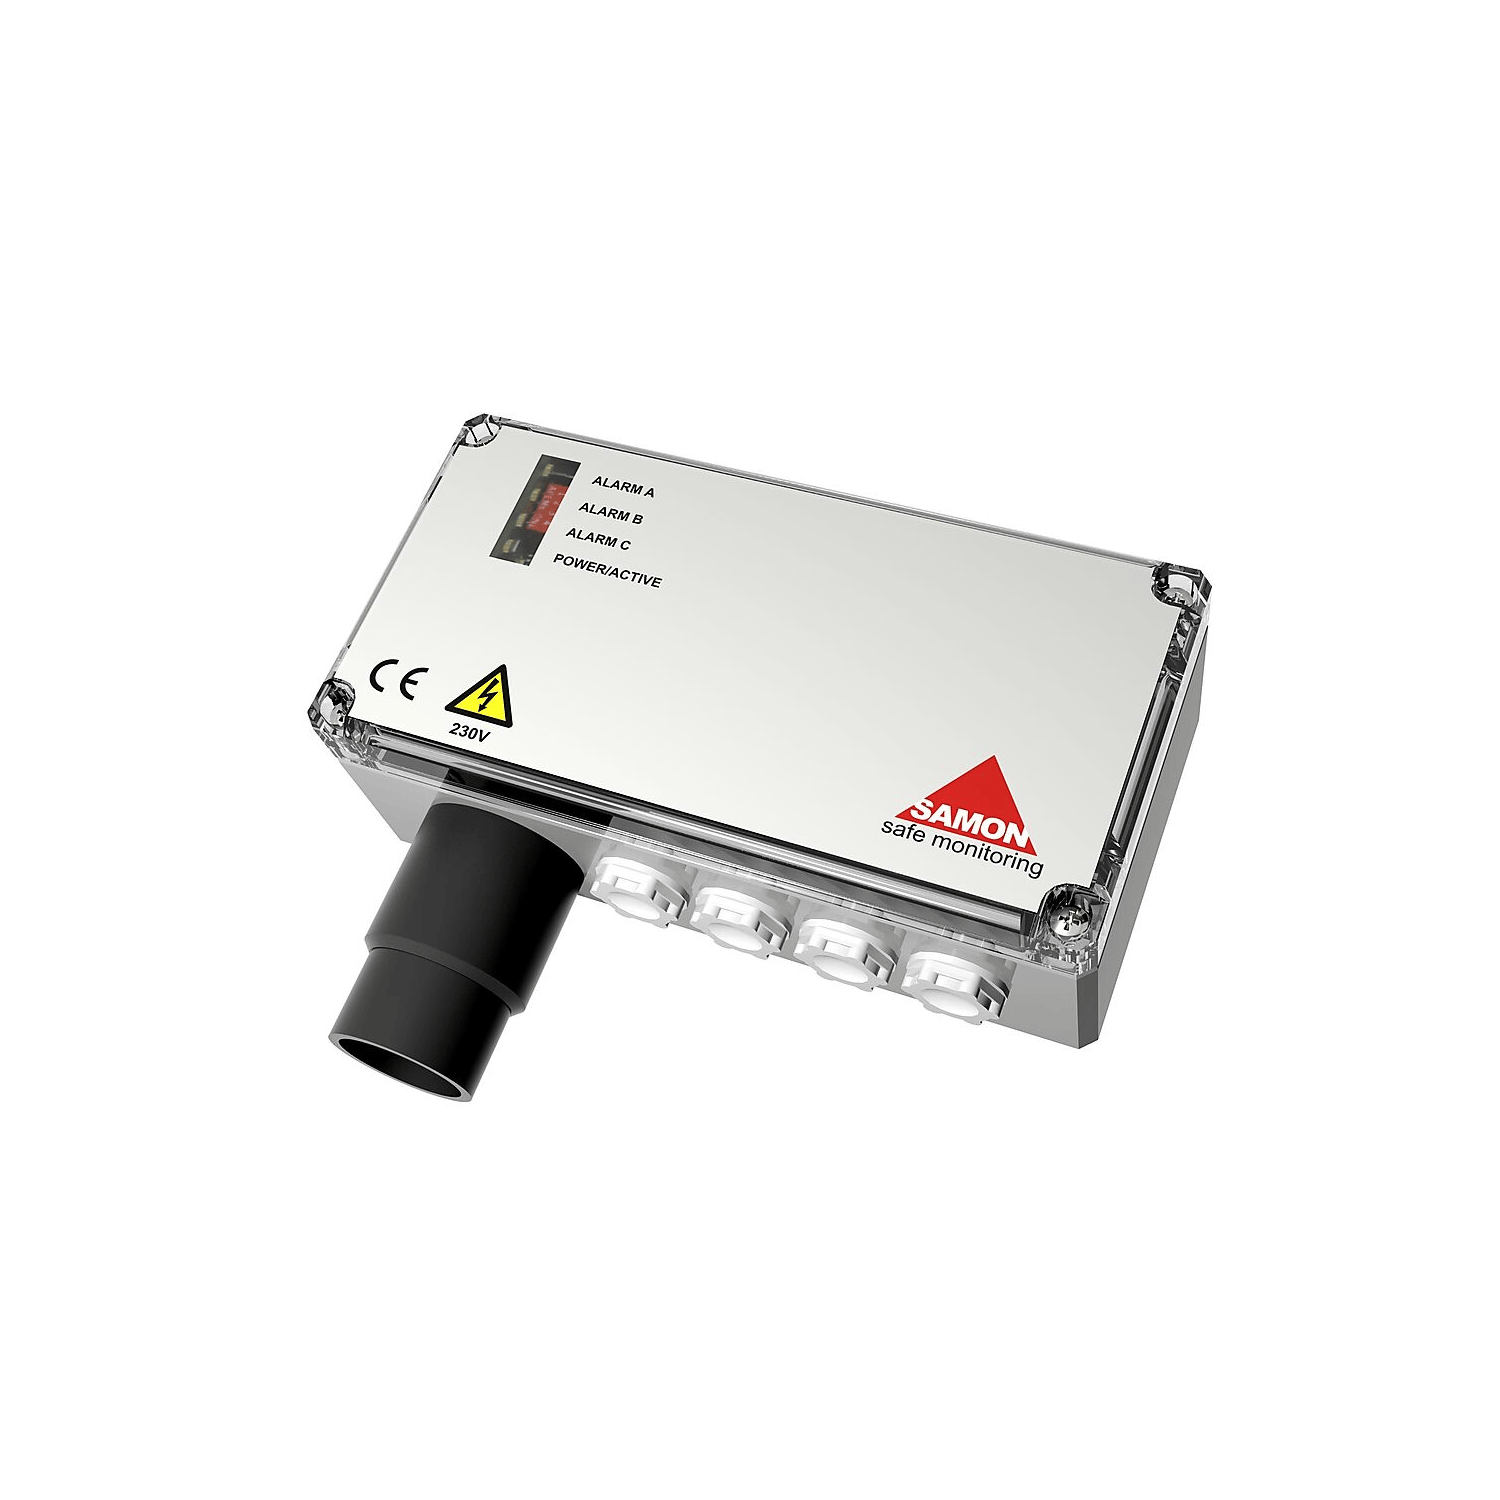 SAMON GS230-HFC 37-425, HFC Gasdetector 230V 2W IP54 0-4000PM